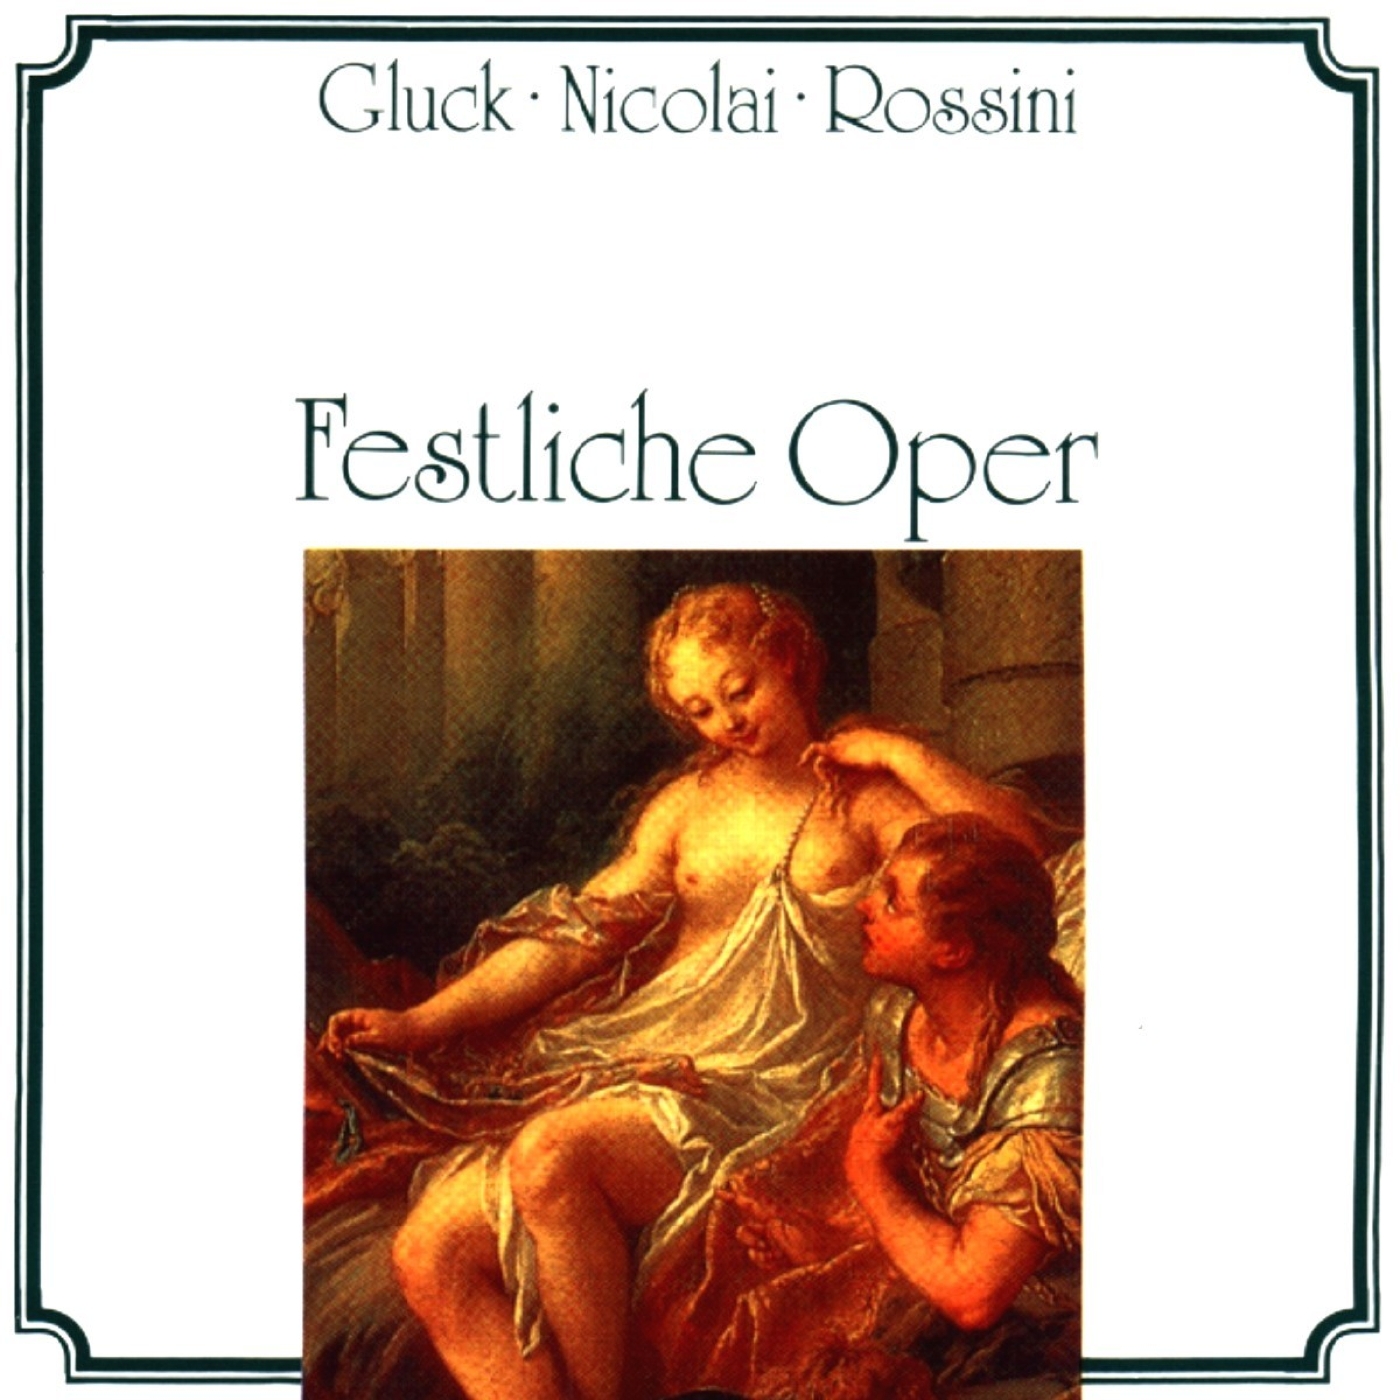 Gioacchino Rossini: Wilhelm Tell  Ouvertü re